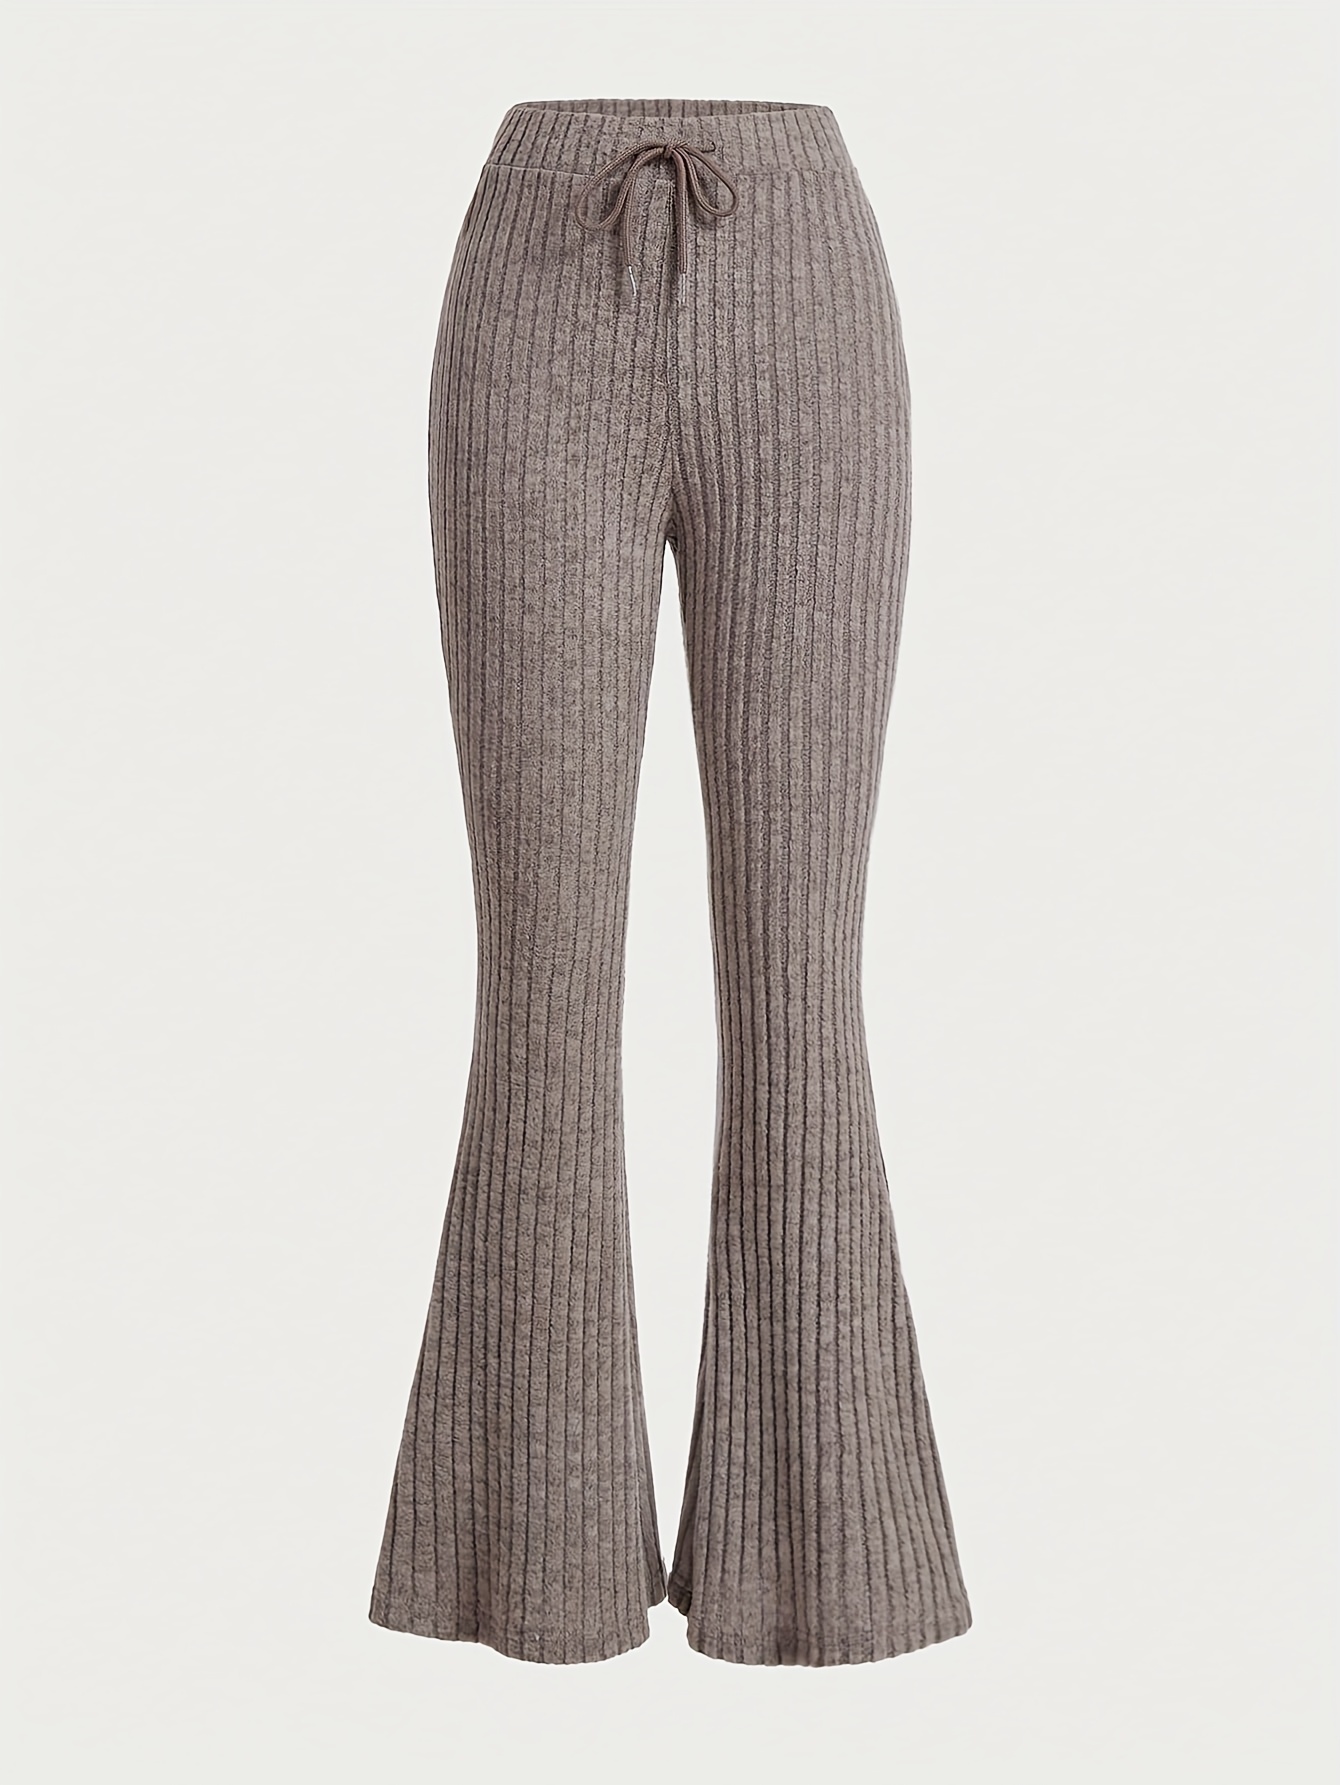 Pointelle Rib Knit Flare Pants - Small / Mocha  Flare pants, Ribbed flare  pants outfit, Flared pants outfit